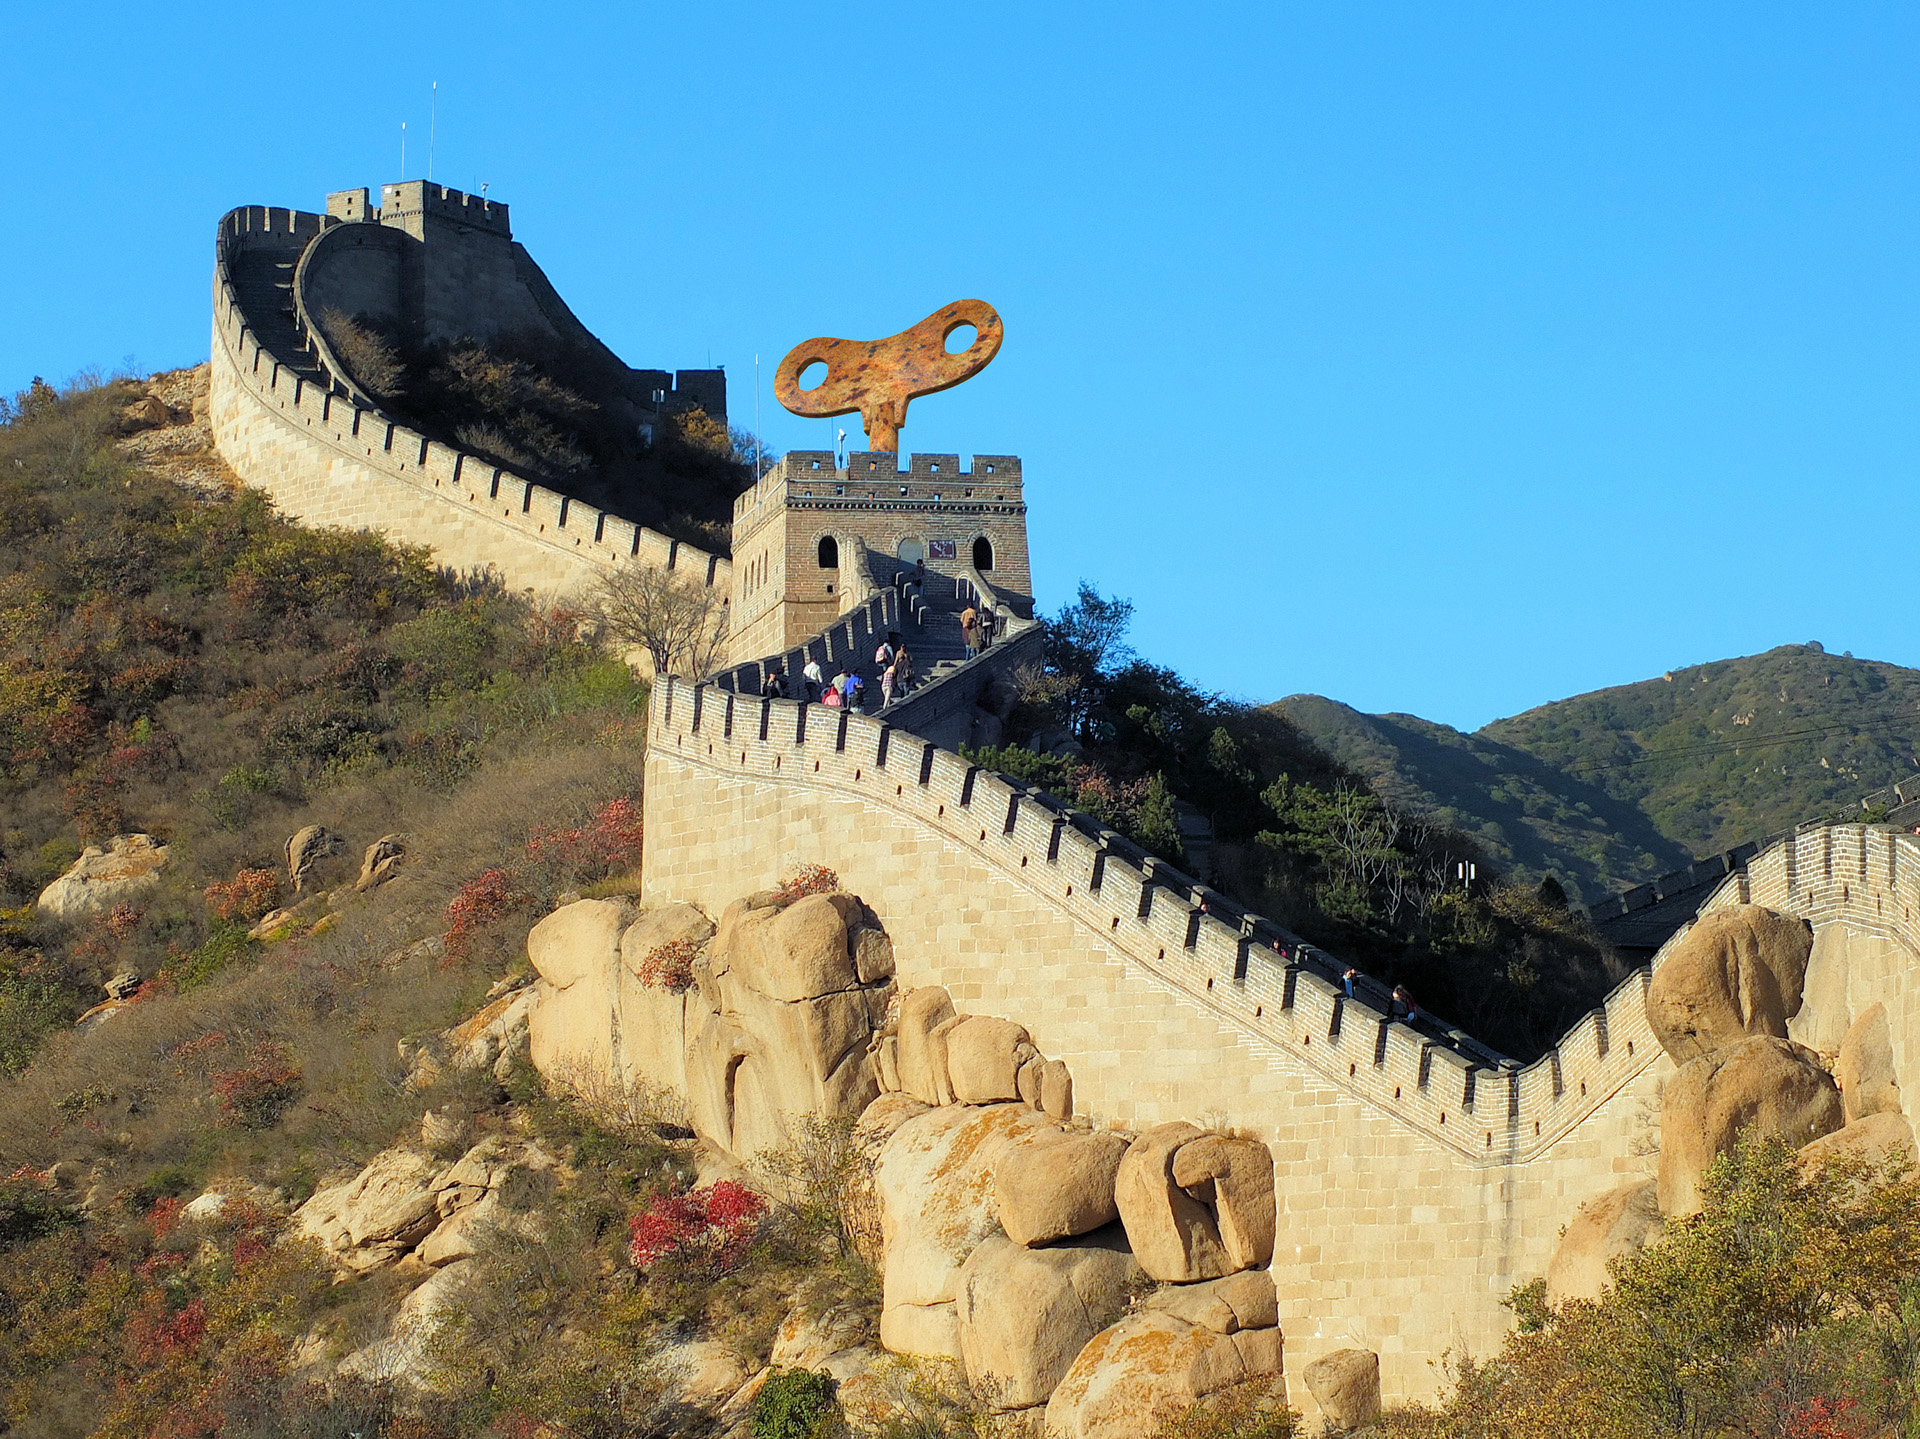 Thousand steps. Китай Великая китайская стена. The great Wall at Badaling Китай. Великая китайская стена Хубэй. Китайская стена 19 век.